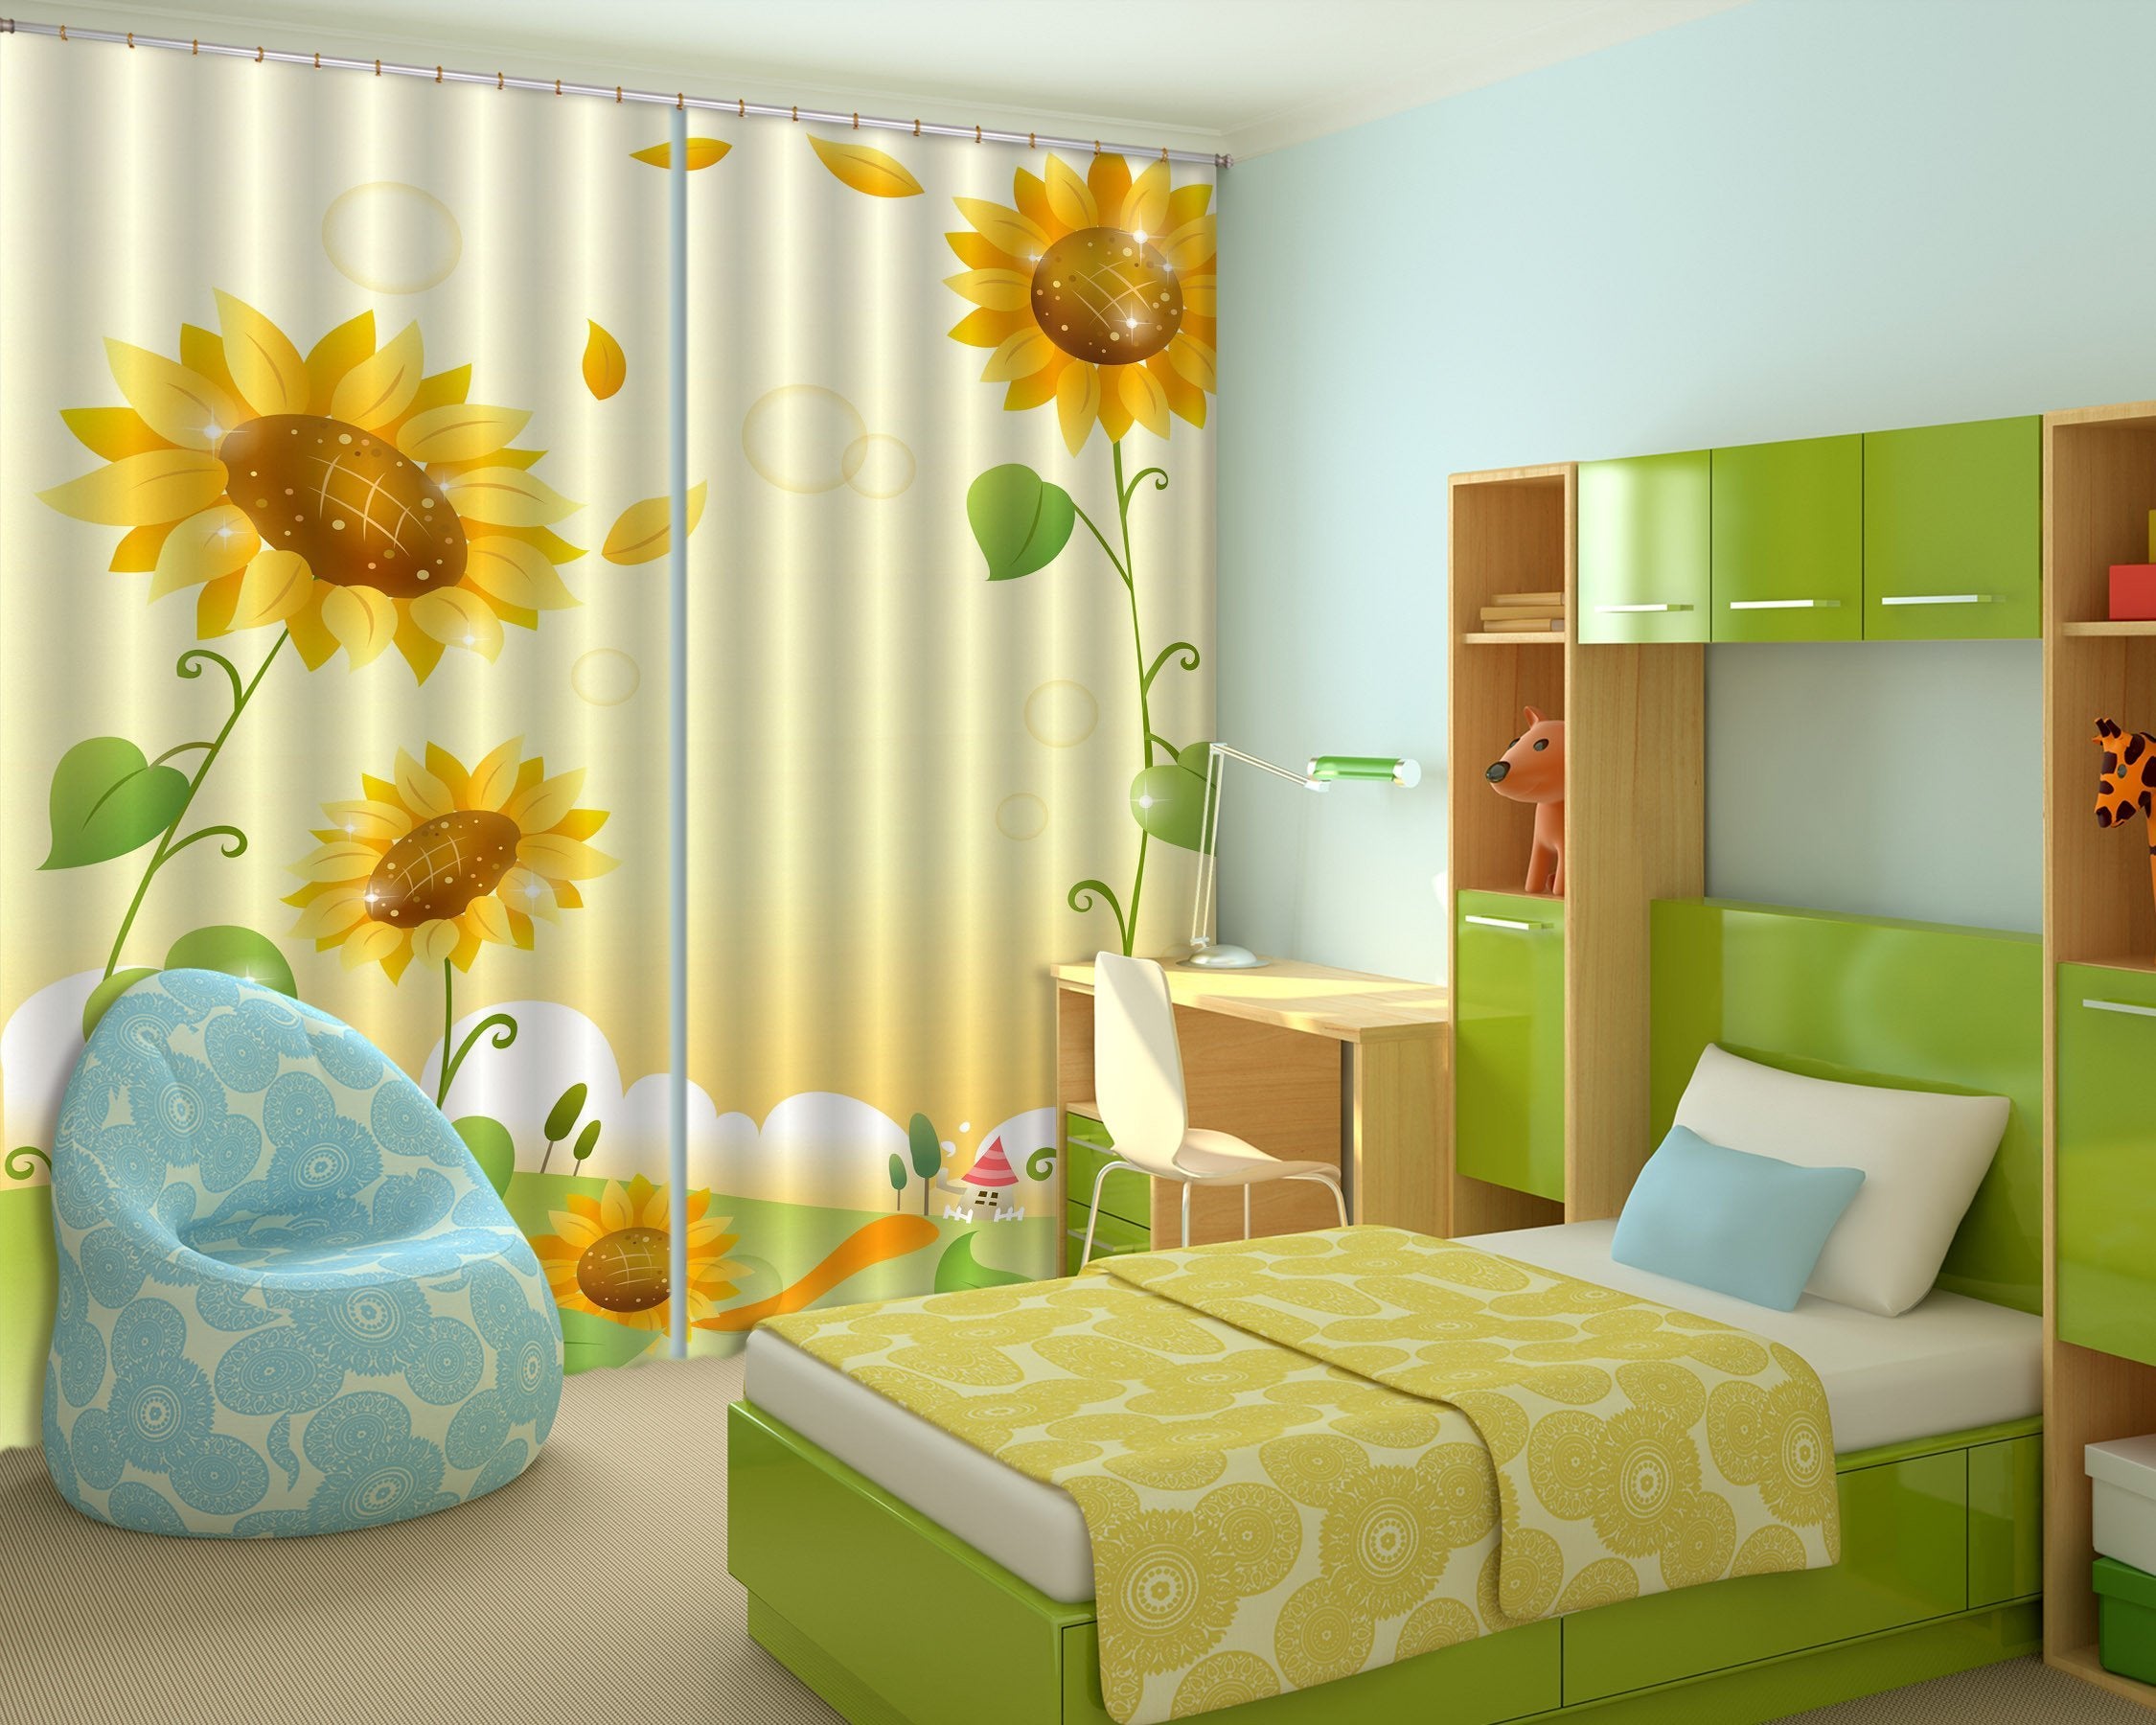 3D Flying Sunflowers 619 Curtains Drapes Wallpaper AJ Wallpaper 